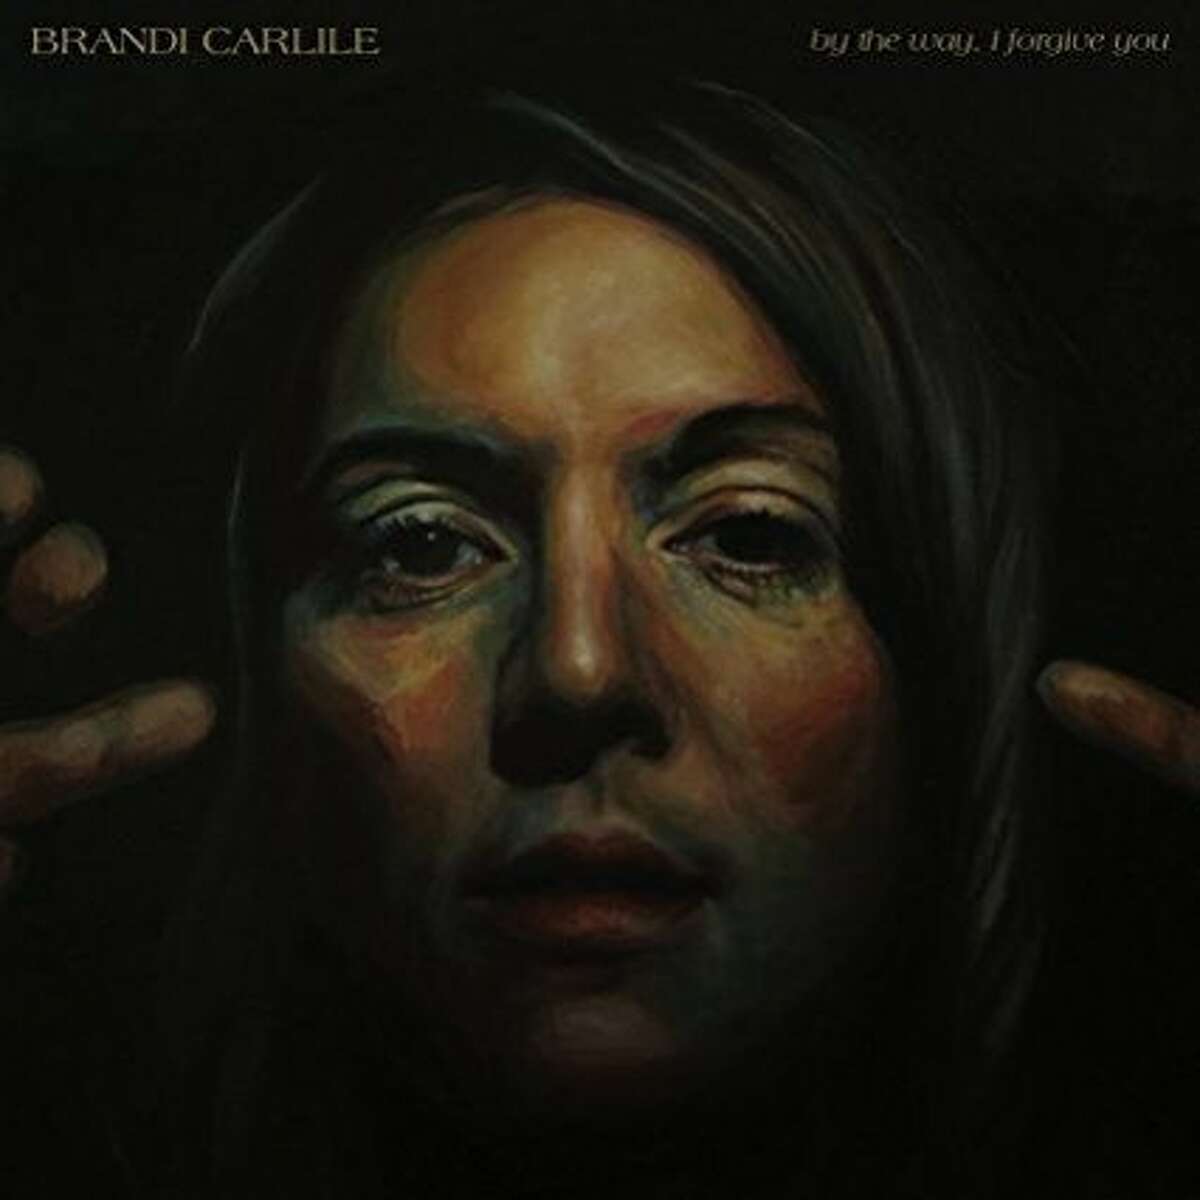 cd cover: Brandi Carlile, "By the Way, I Forgive You"